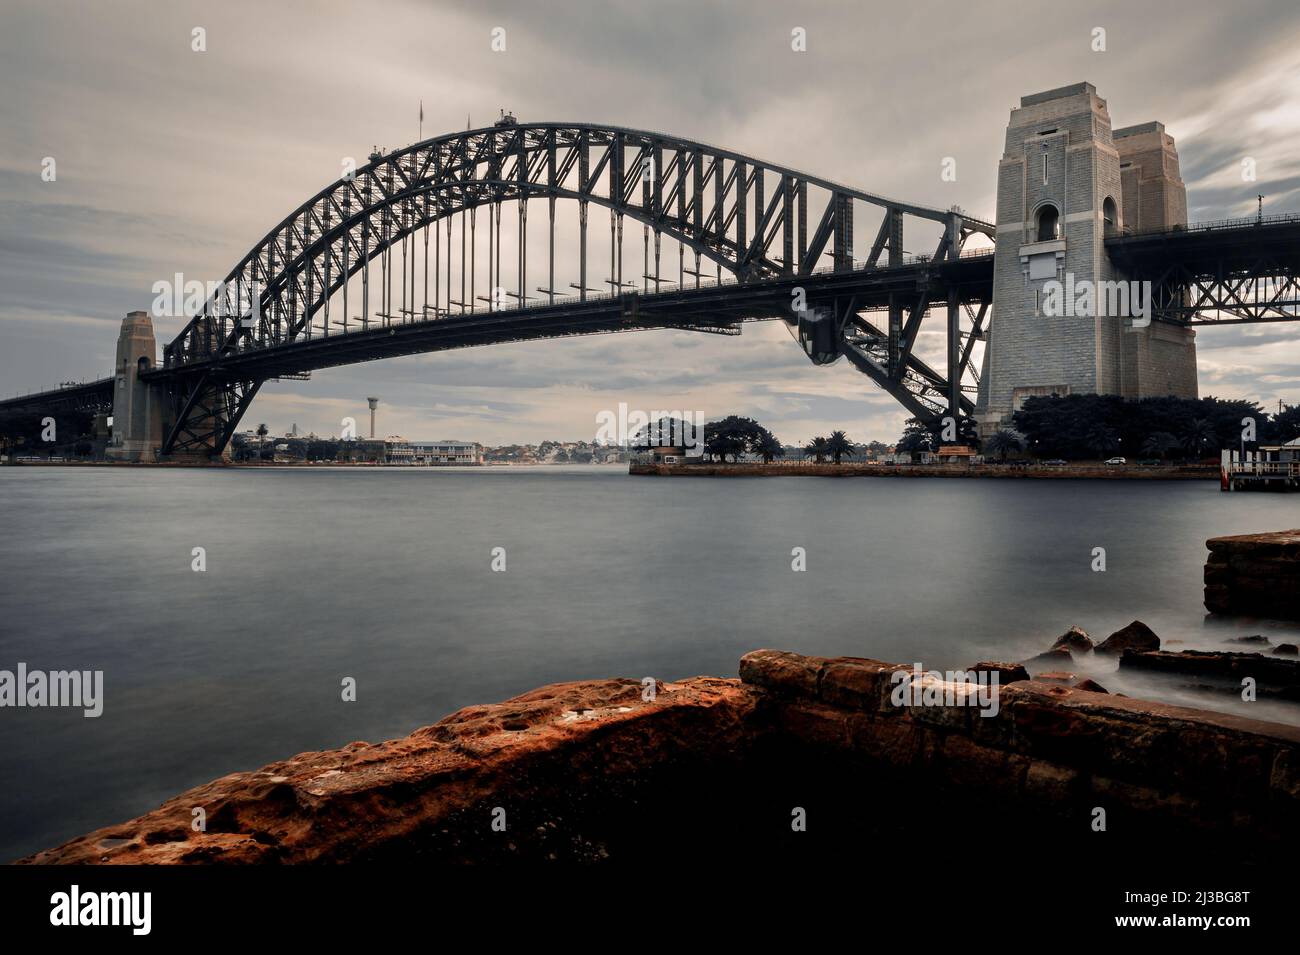 Iconic Sydney Harbour Bridge on a moody day. Stock Photo